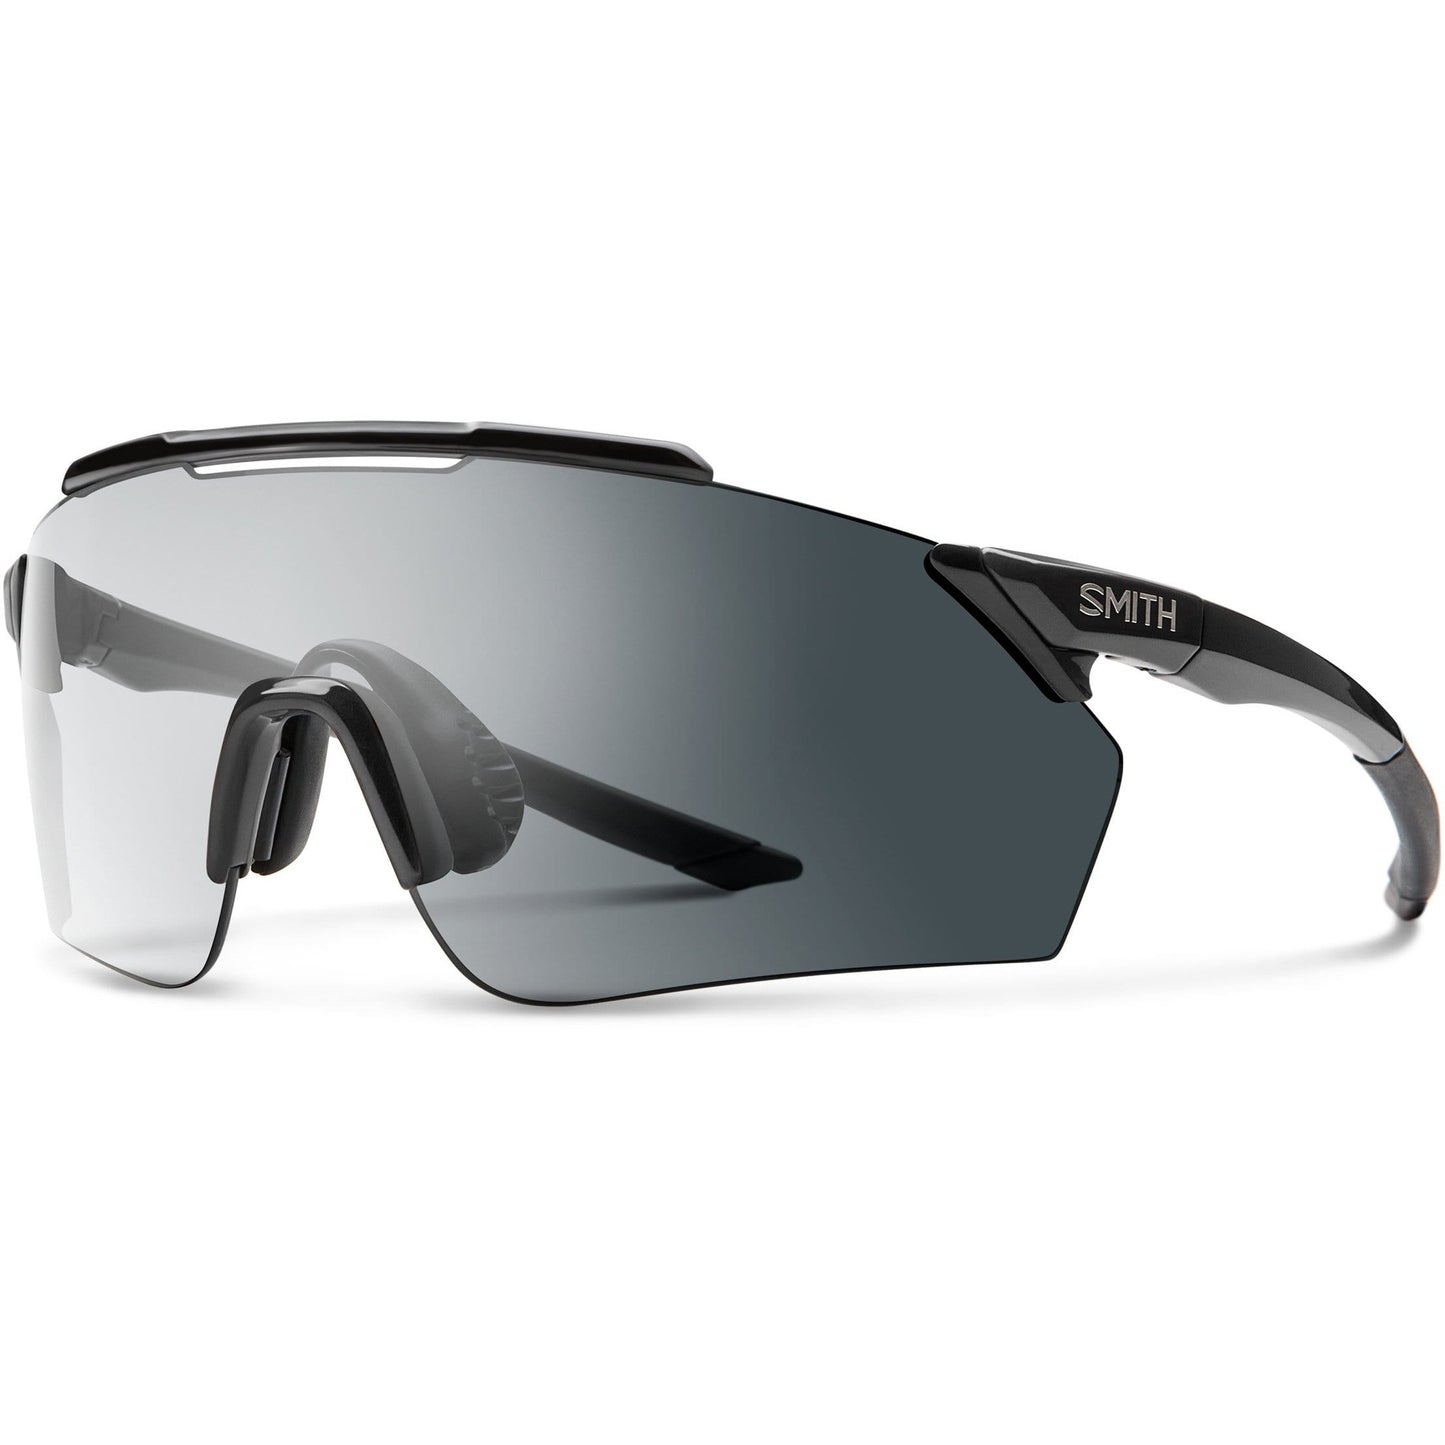 Smith Ruckus Sunglasses - Black Photochromic Clear To Gray